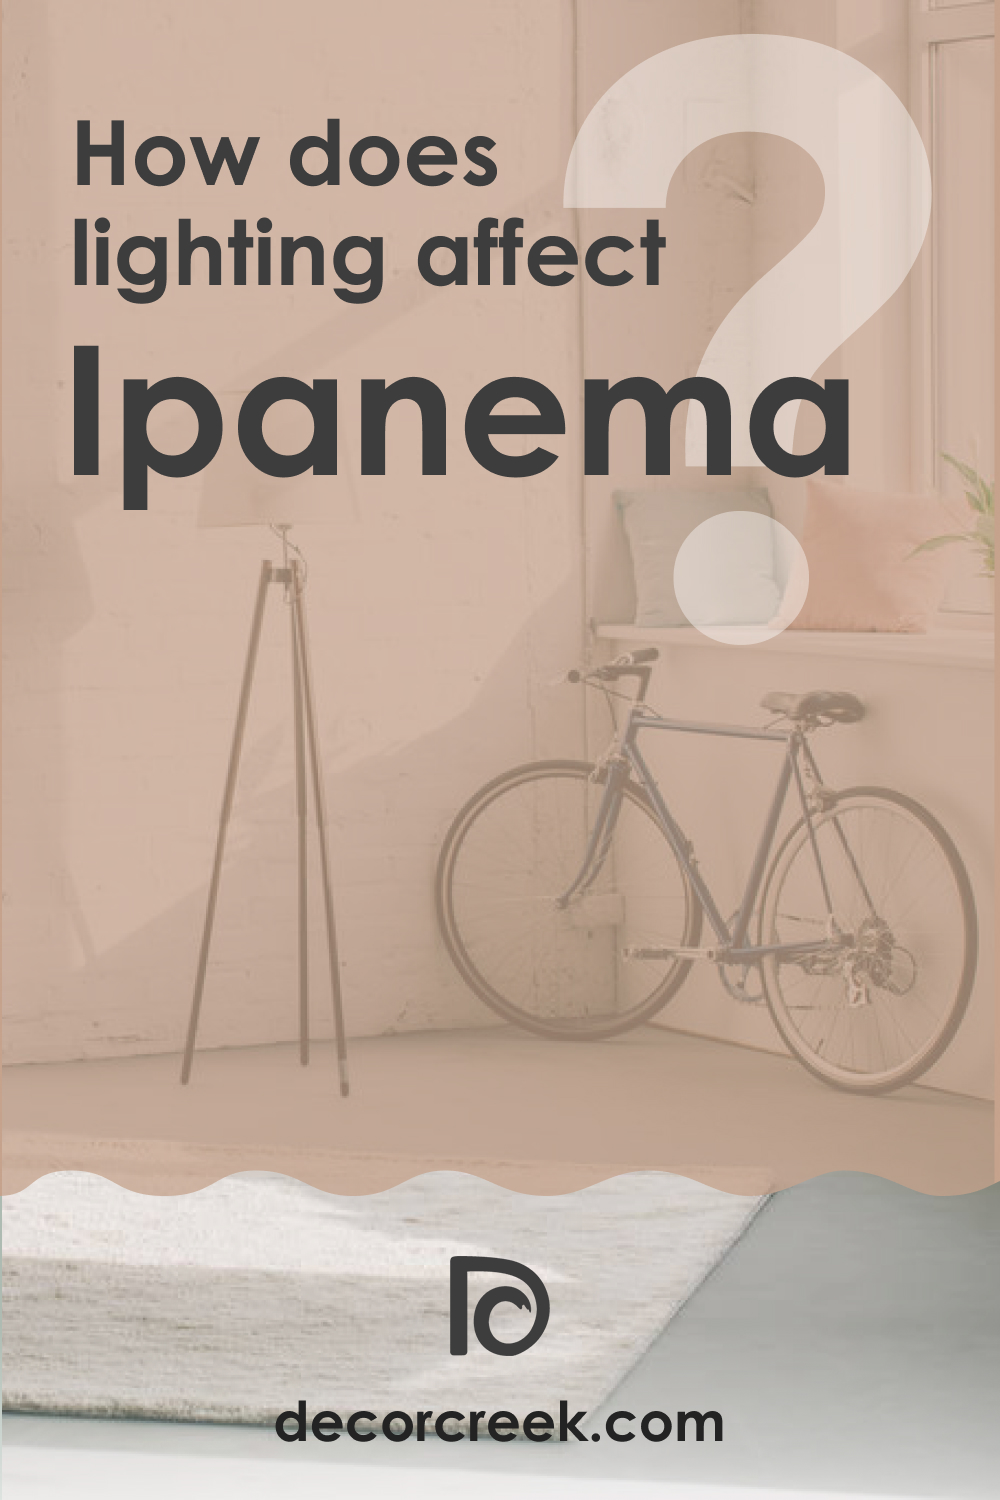 How Does Lighting Affect Ipanema AF-245?